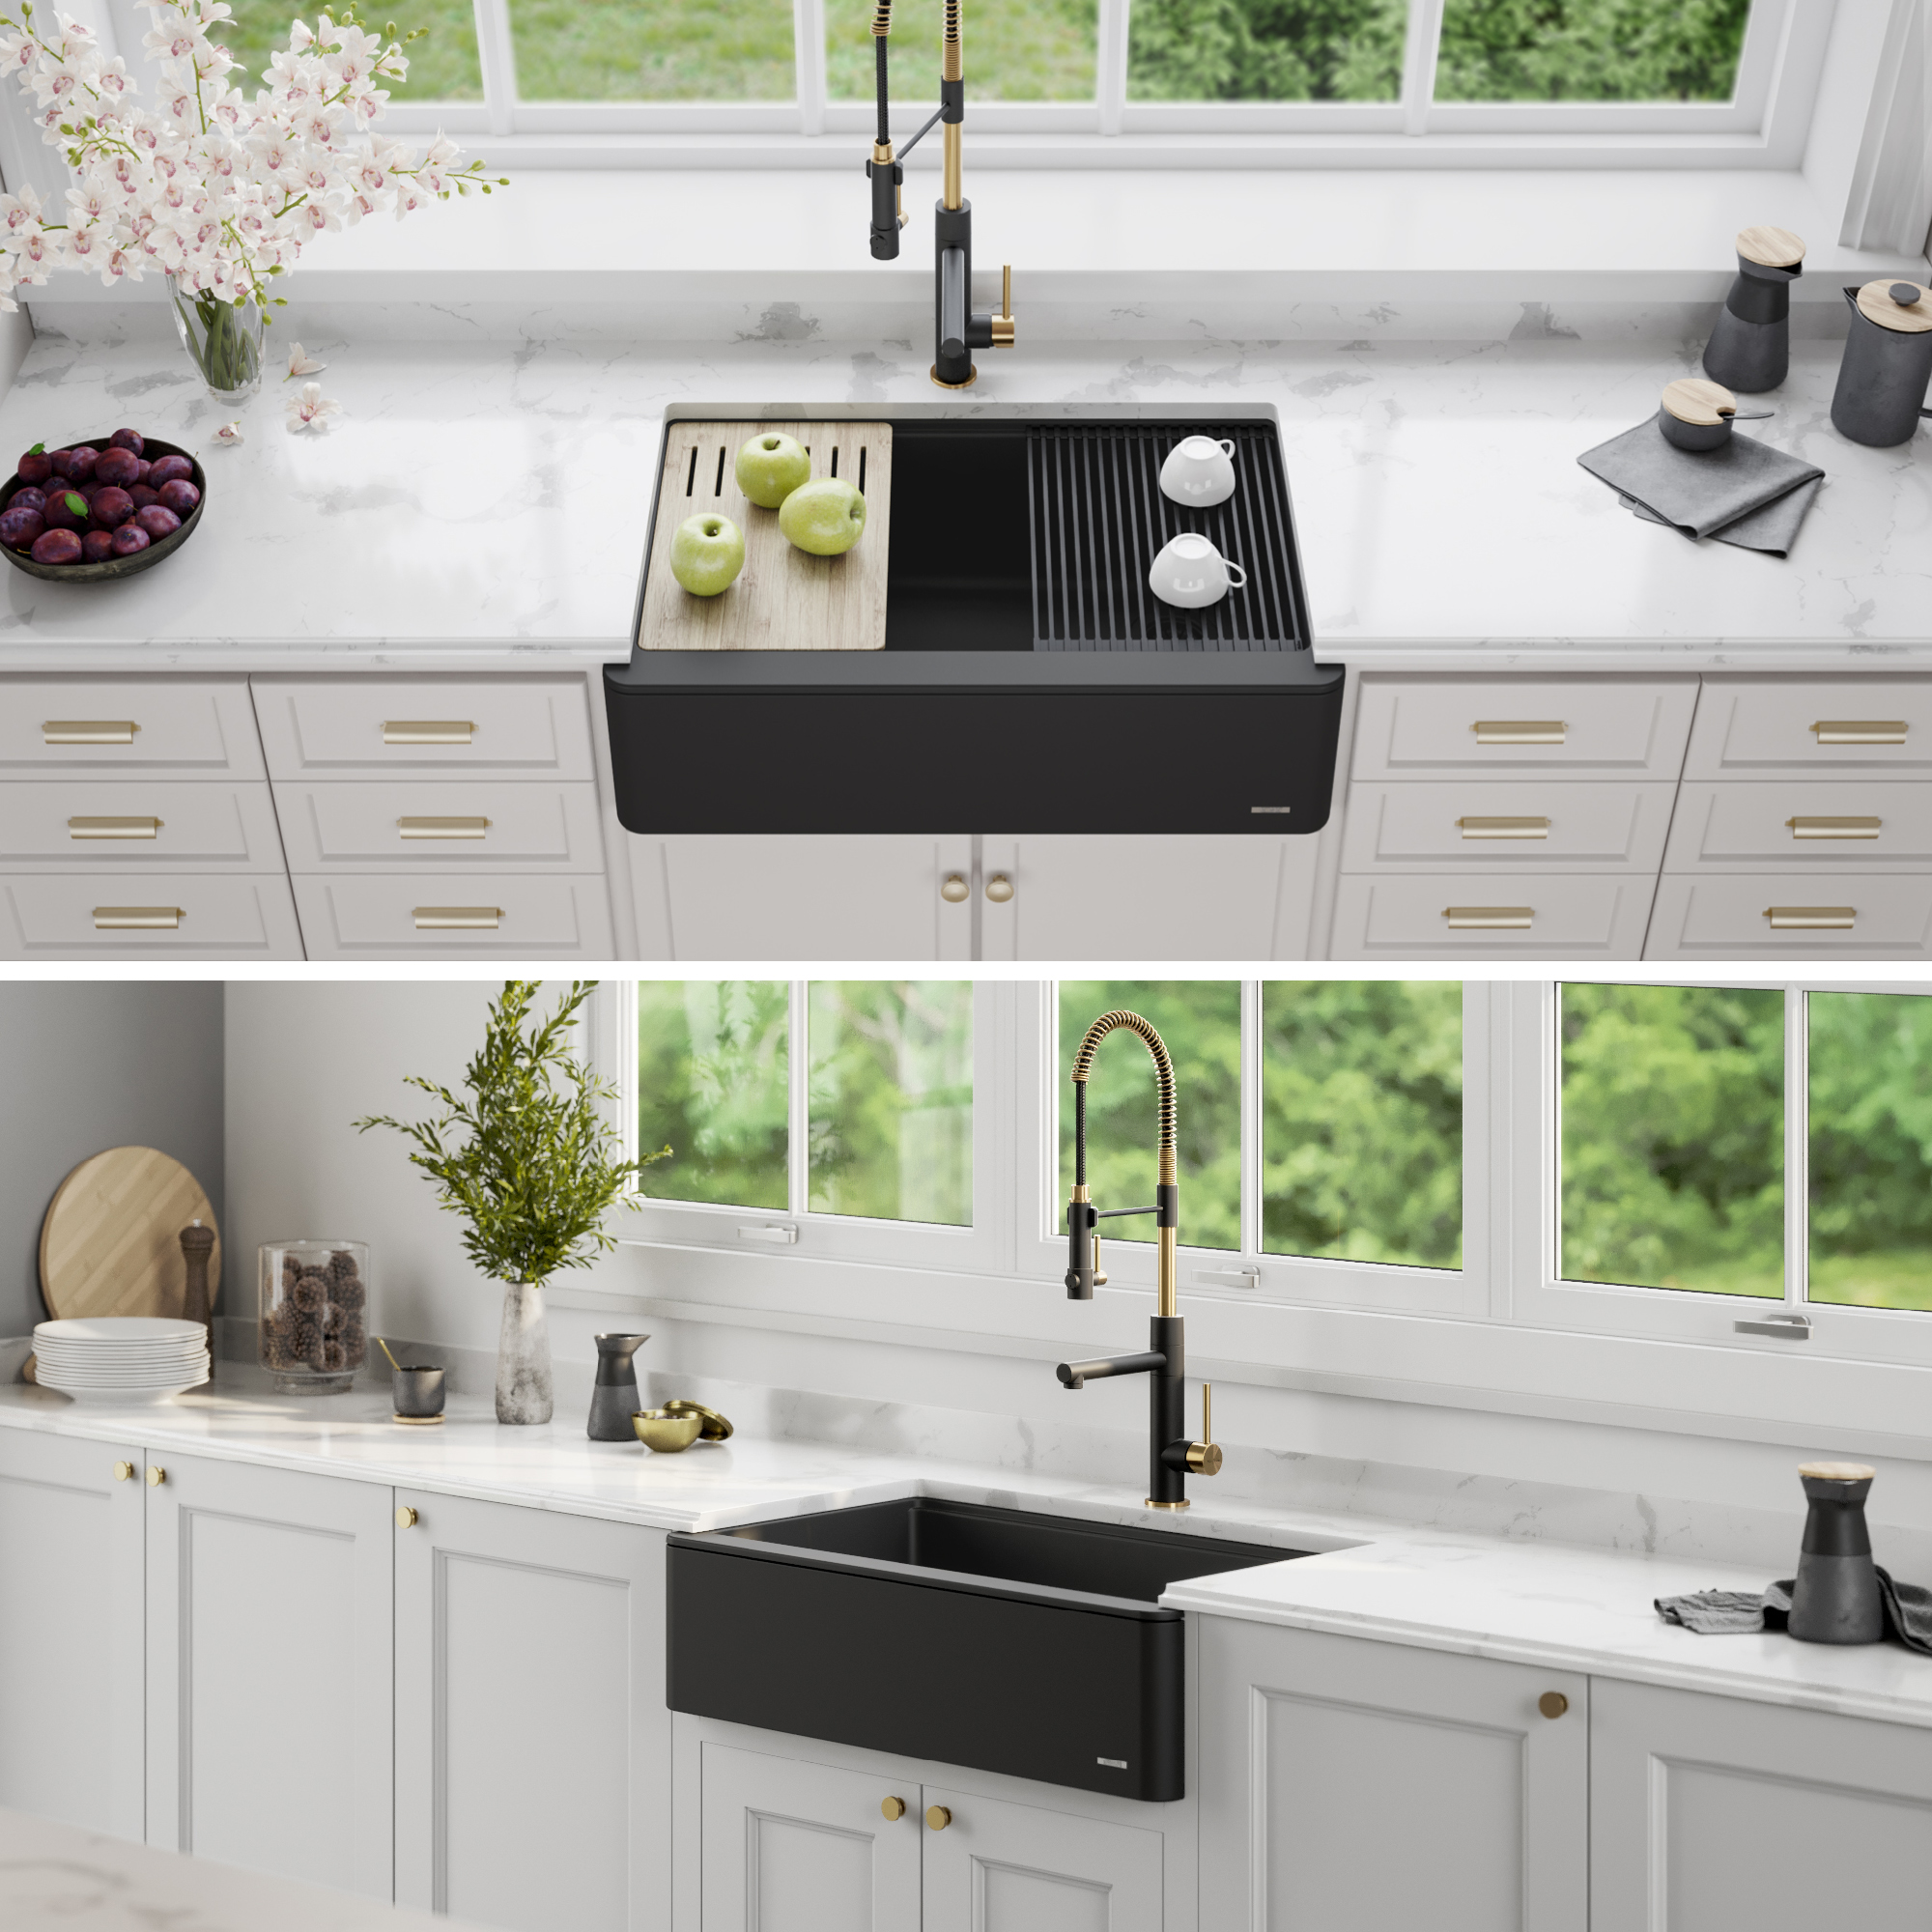 KRAUS Bellucci 33-inch Granite Quartz Composite Farmhouse Flat Apron Front  Single Bowl Kitchen Sink with CeramTek in Black